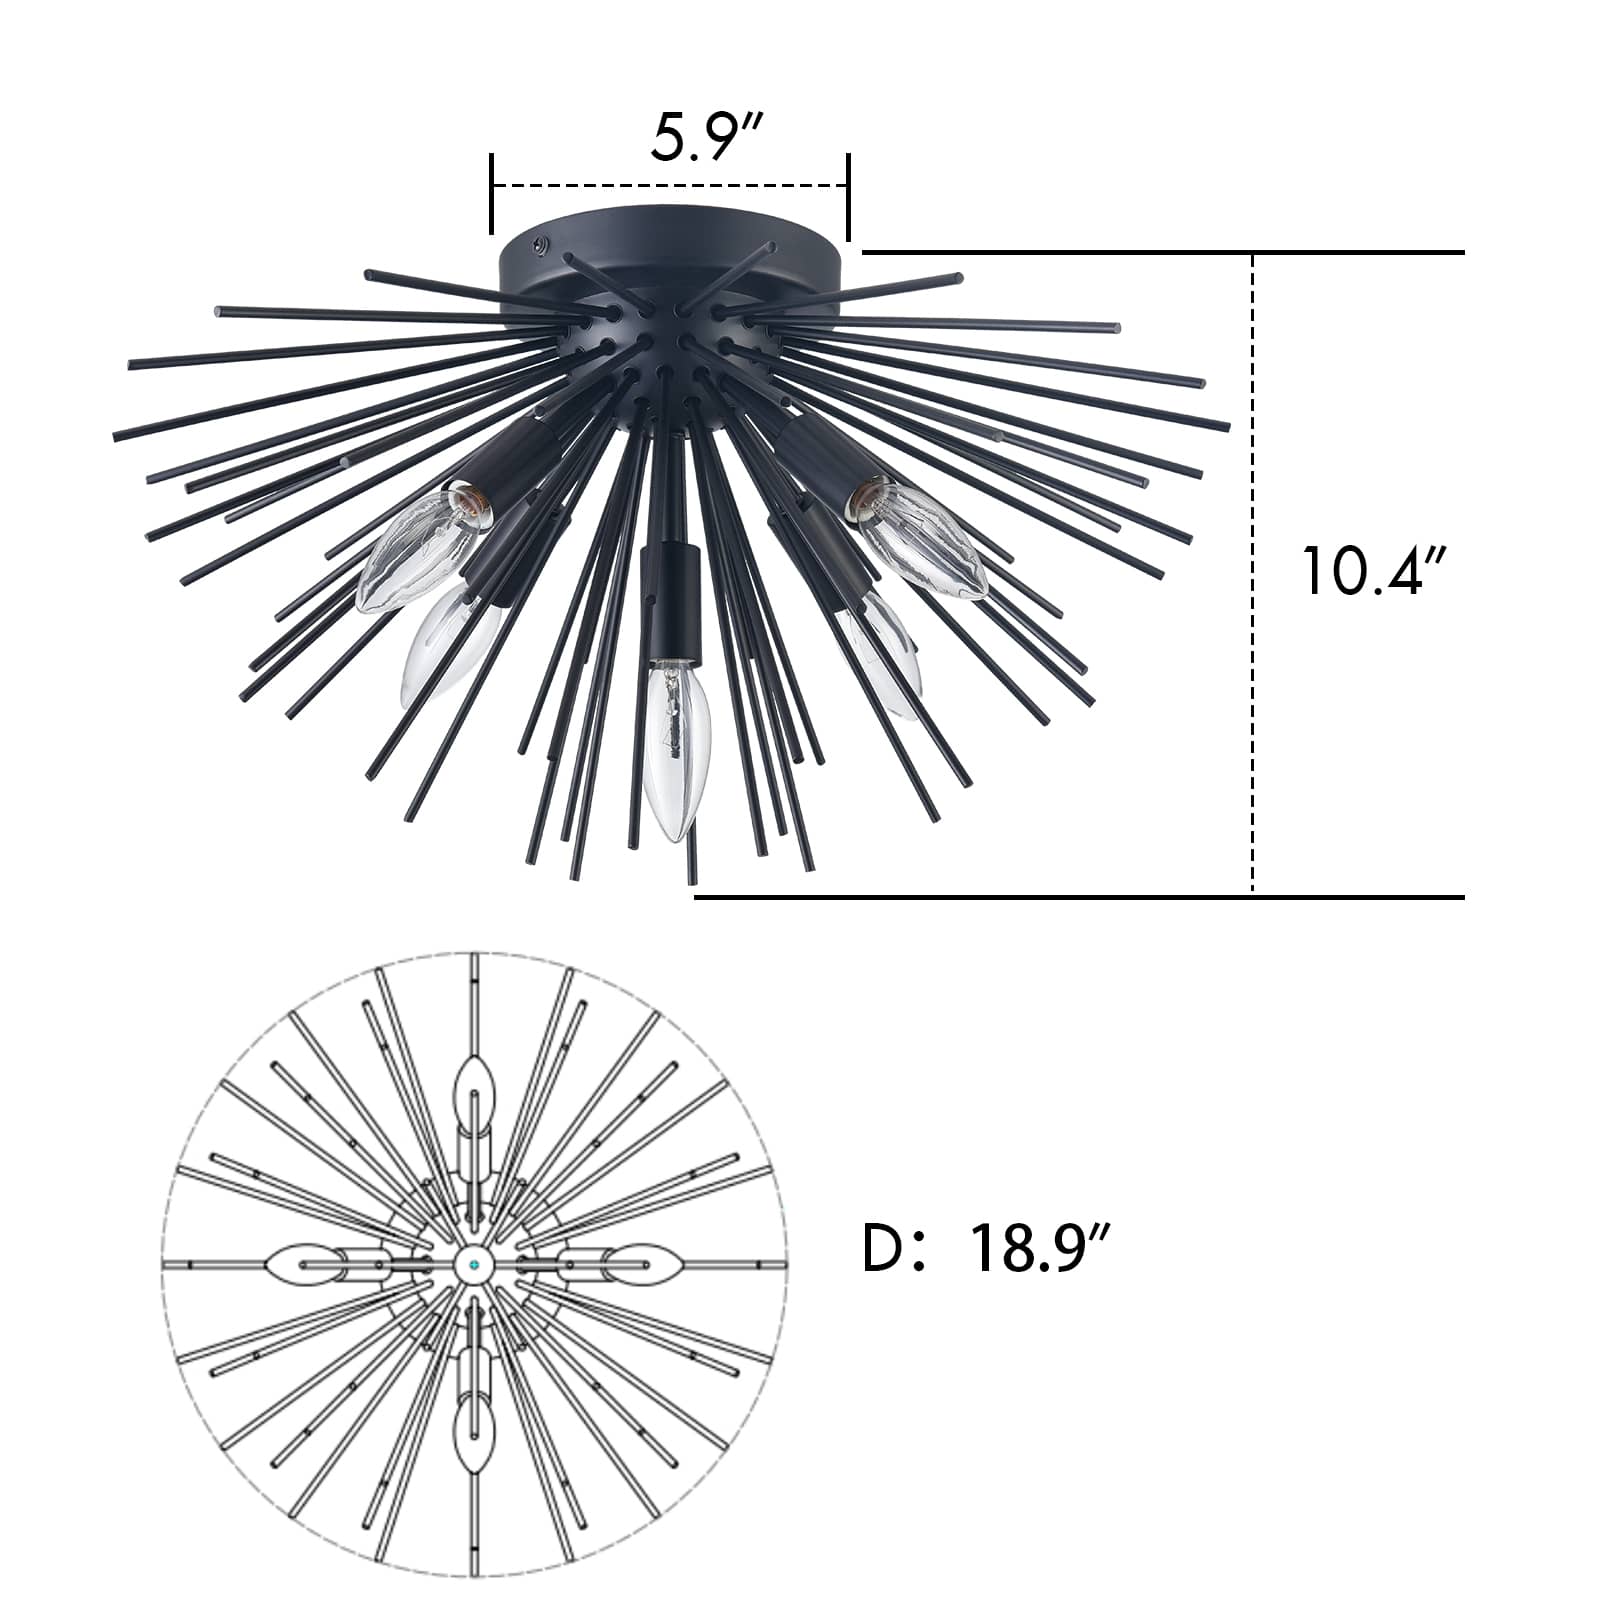 Indsutrial Sputnik Flush Mount Ceiling Light Black Light Fixture